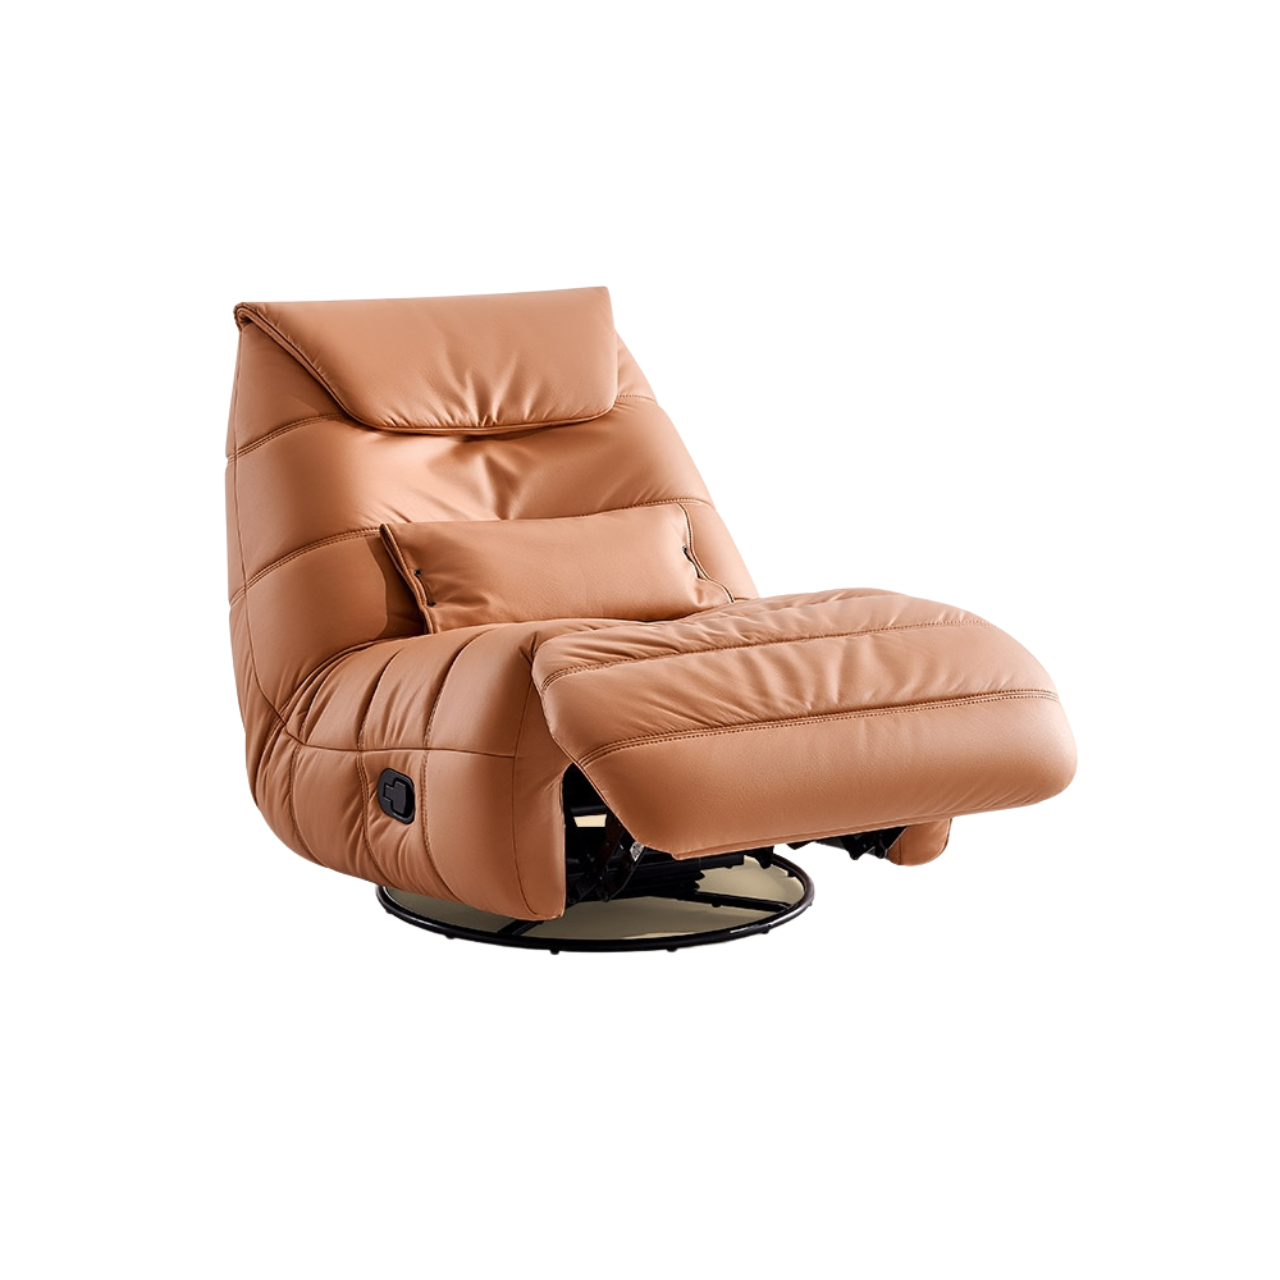 Adjustable Orange Leath-Aire Single Sofa in Caterpillar Lounge Style